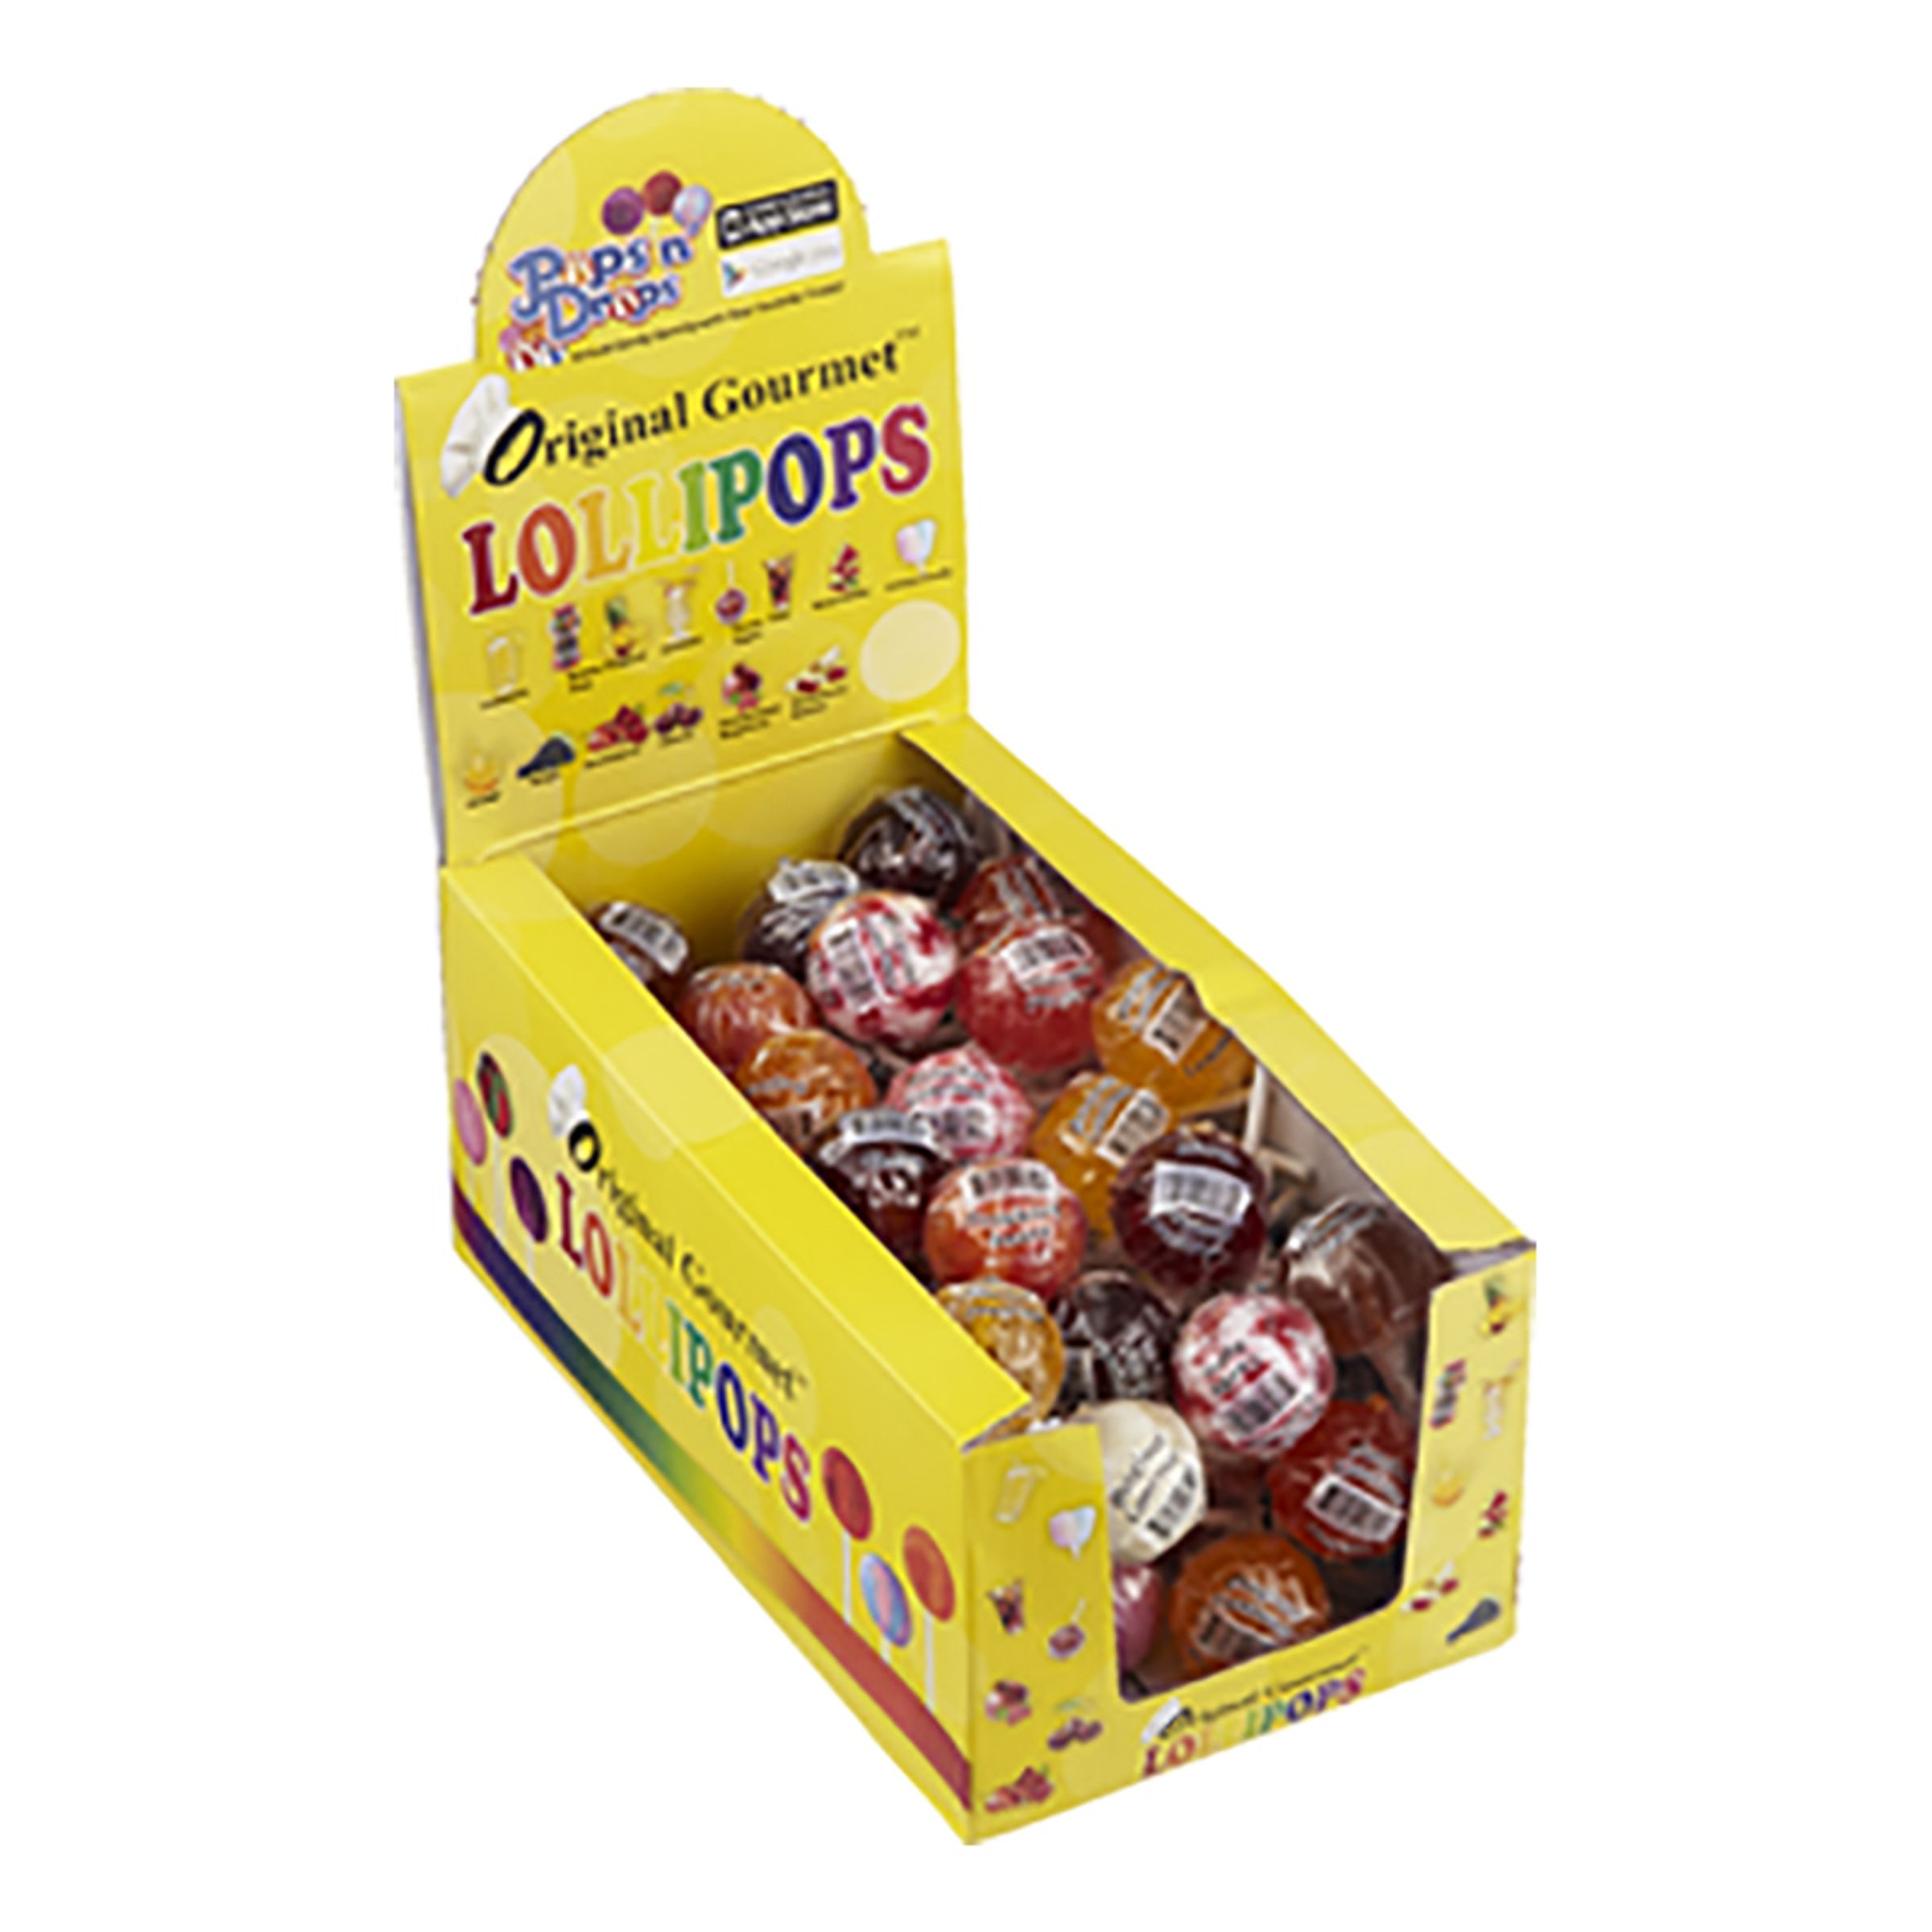 Original Gourmet Lollipops - 1-pack - present/presenttips